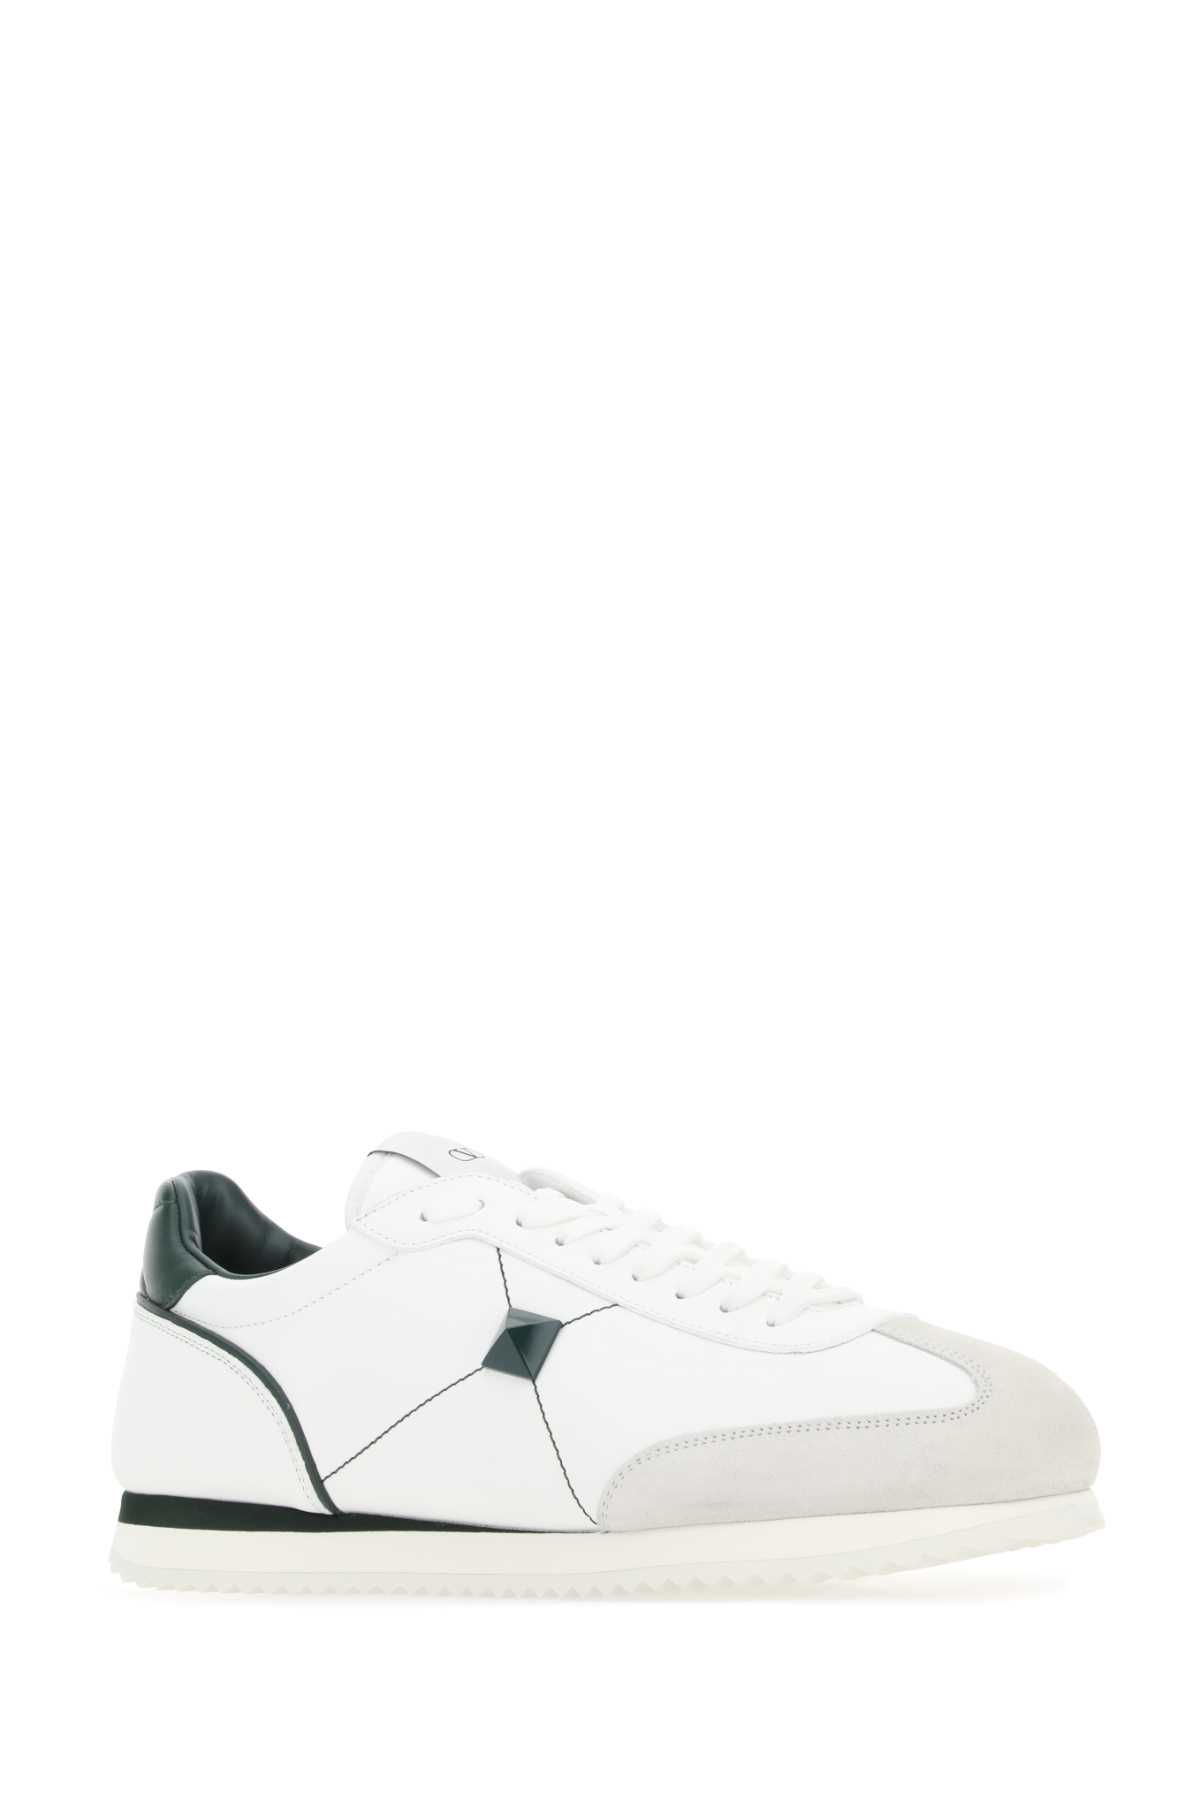 Valentino Garavani White Leather Stud Around Sneakers In Uz7